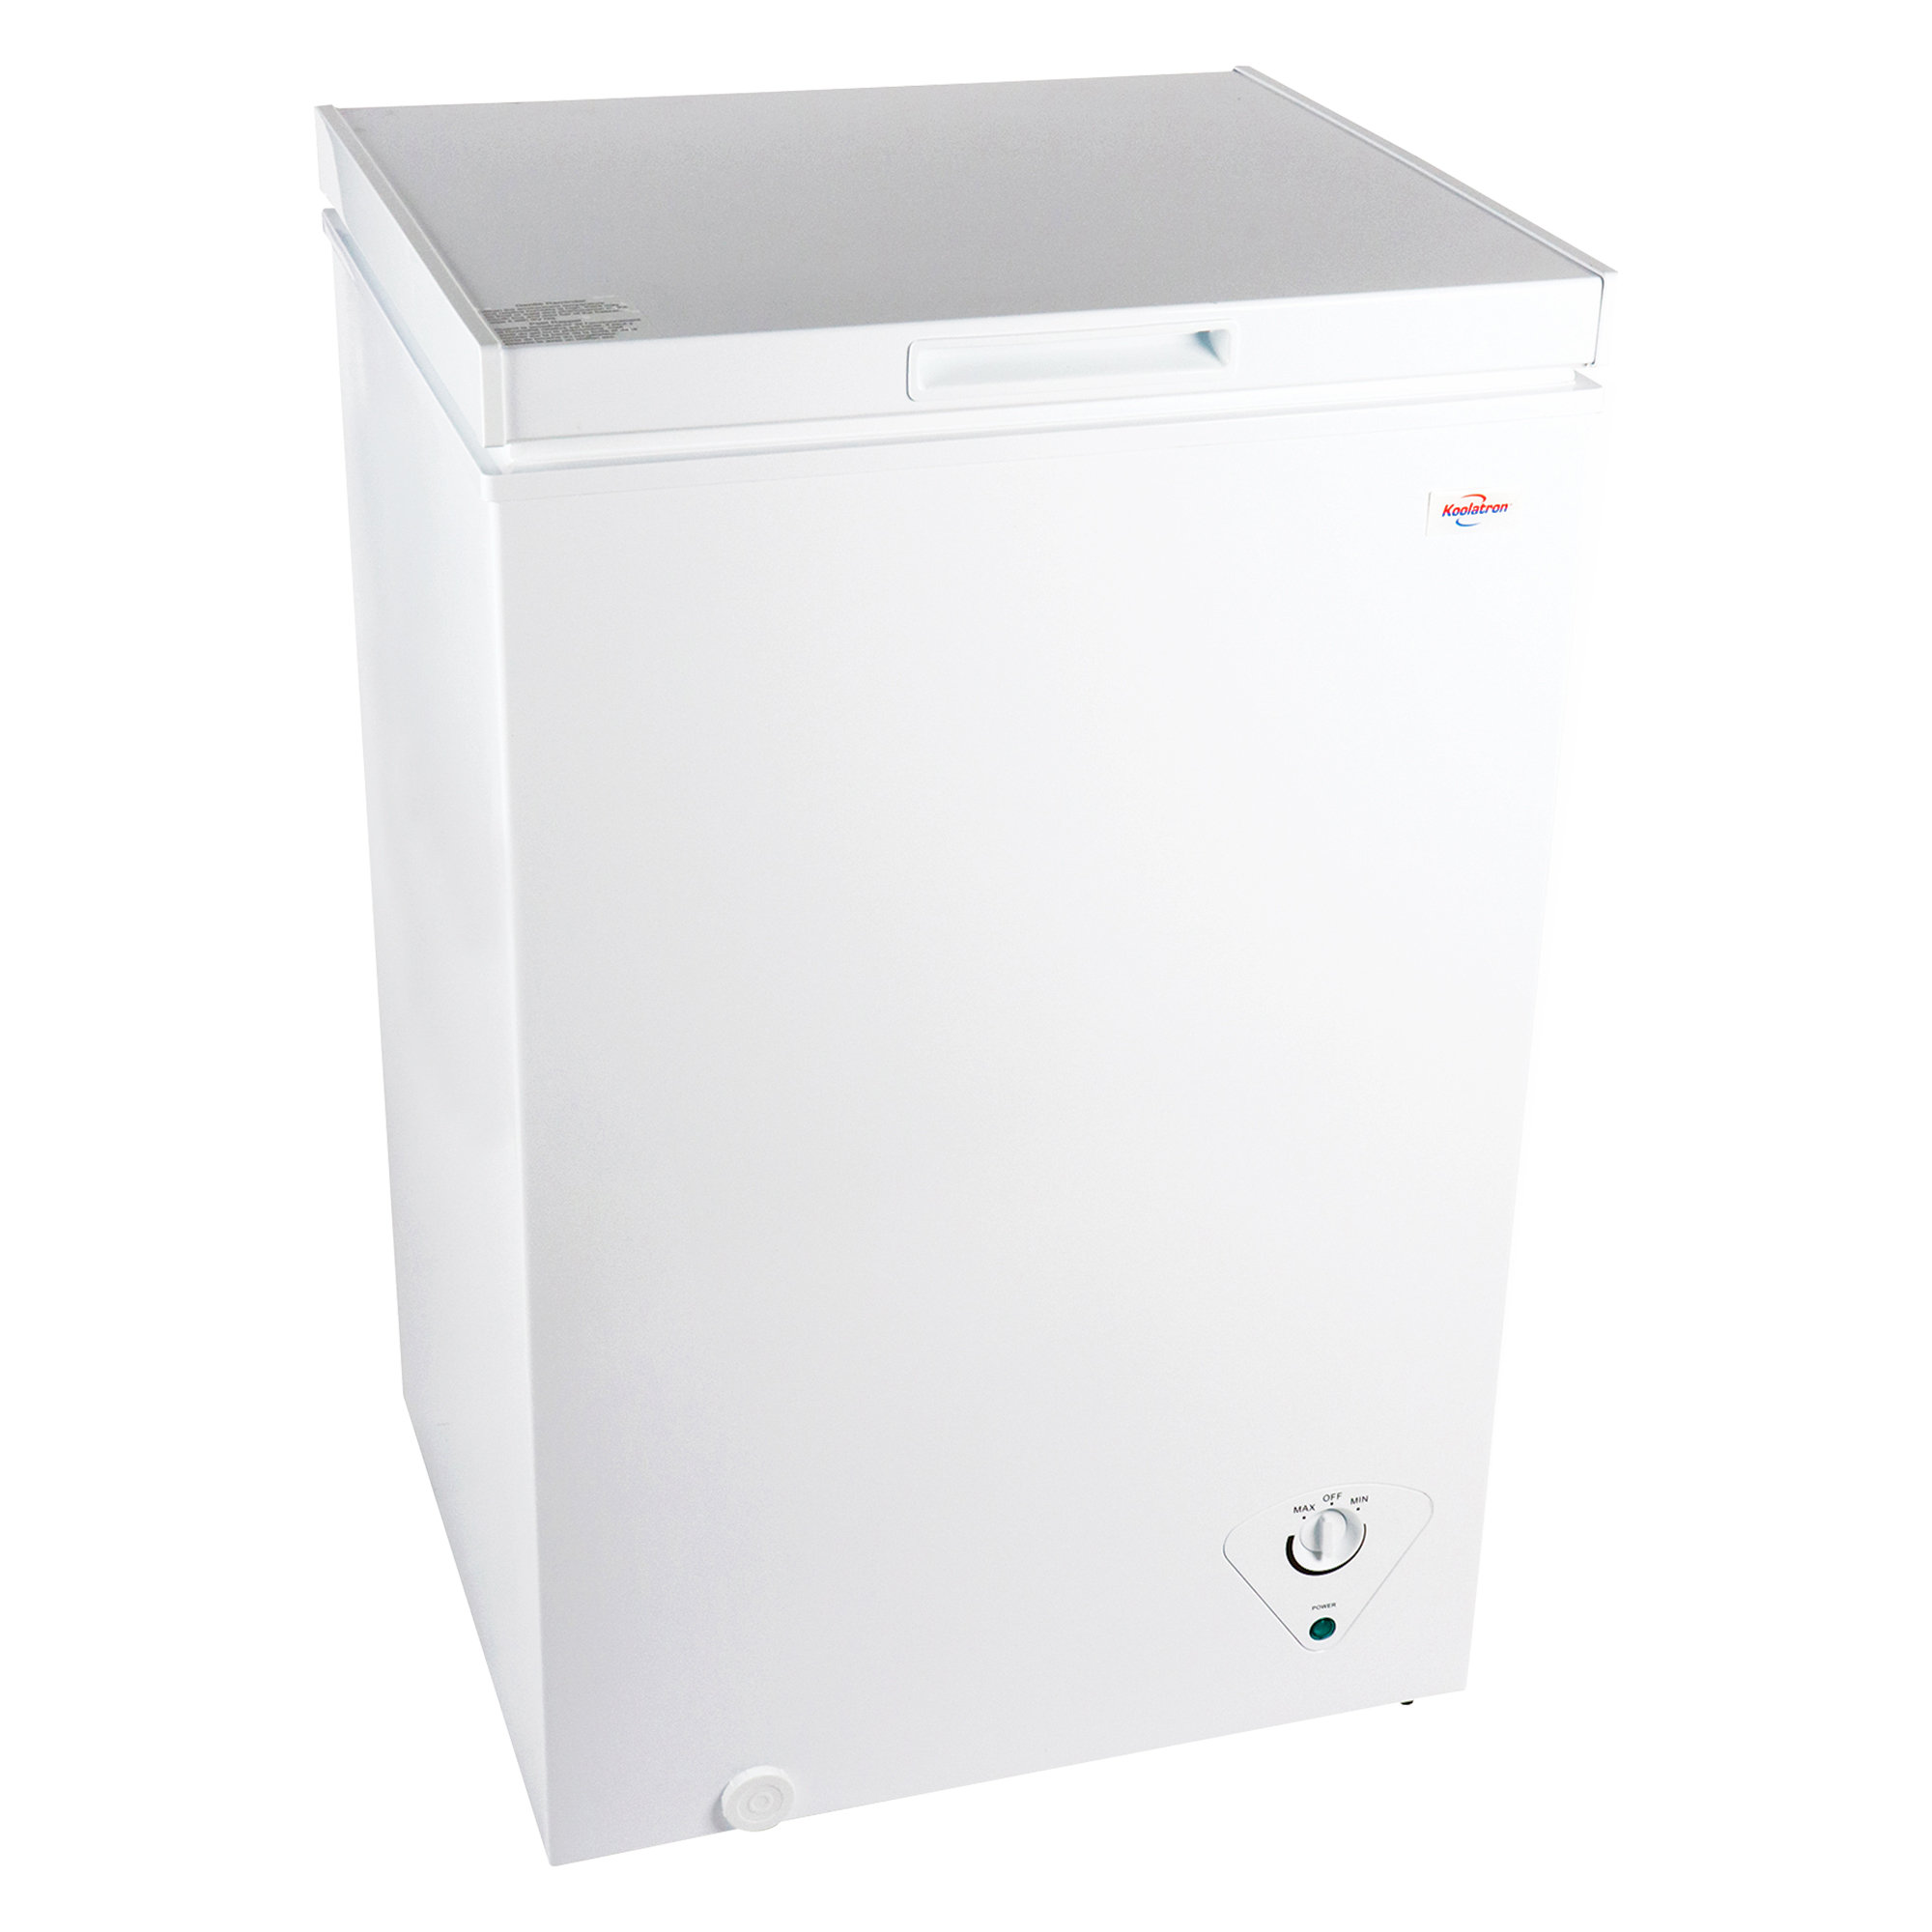 TABU Chest Freezer, 5.0 Cu Ft Deep Freezer with Adjustable Temperature, Compact  Freezer with Top Open Door (White) 